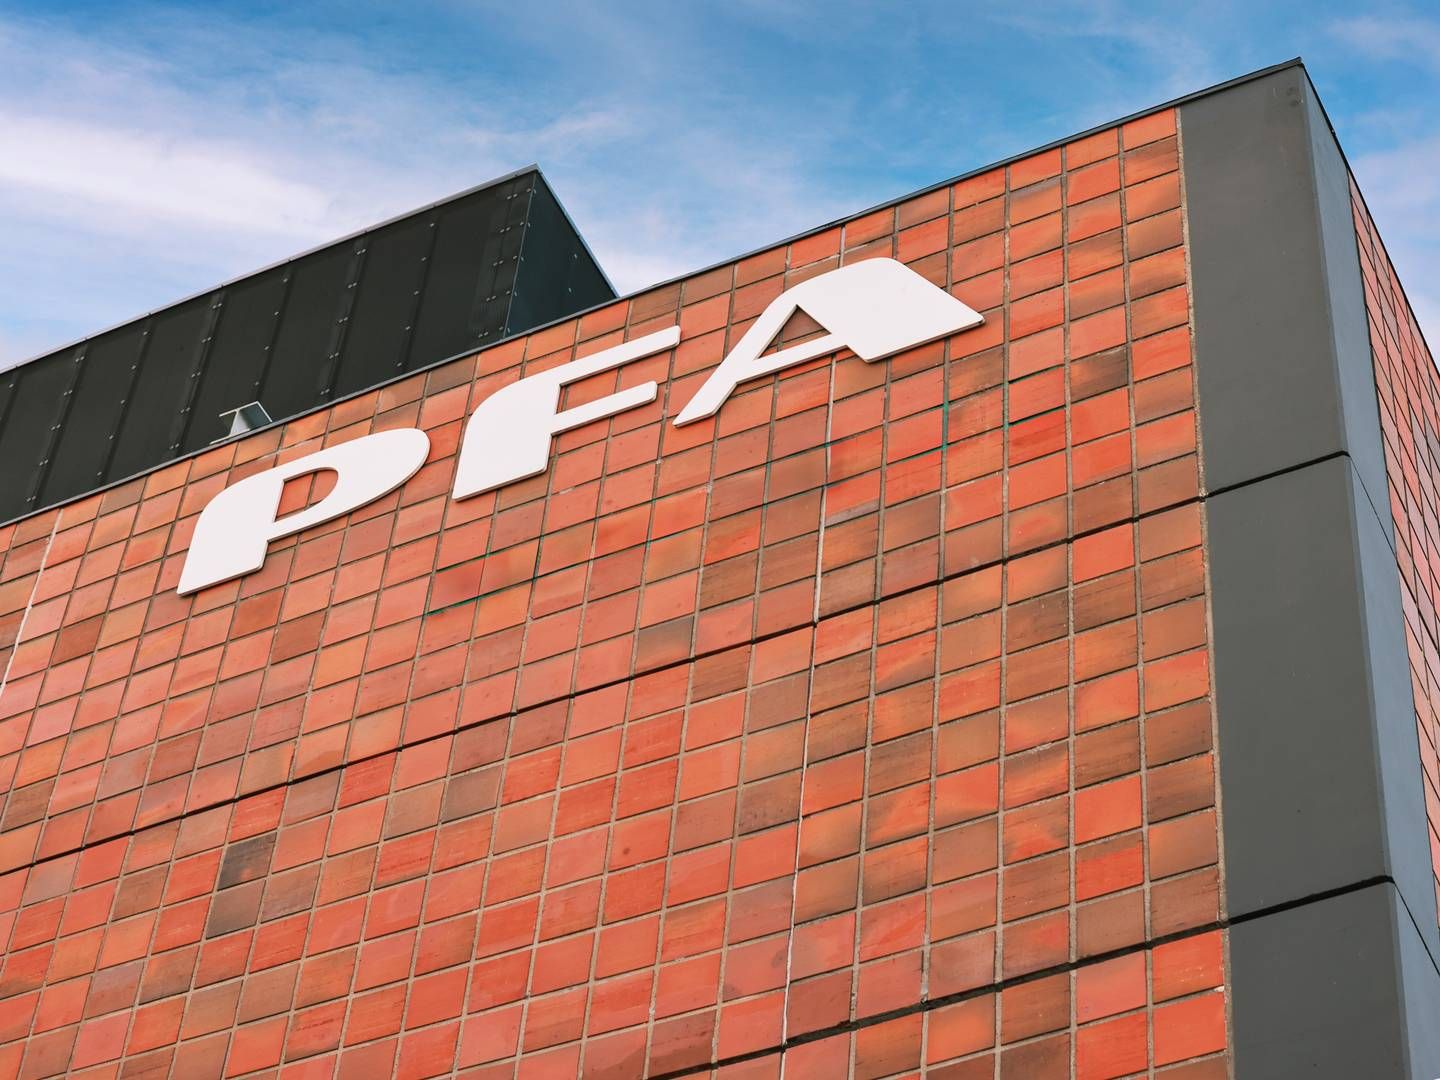 PFAs aktiechef stopper efter seks år. | Foto: Pfa